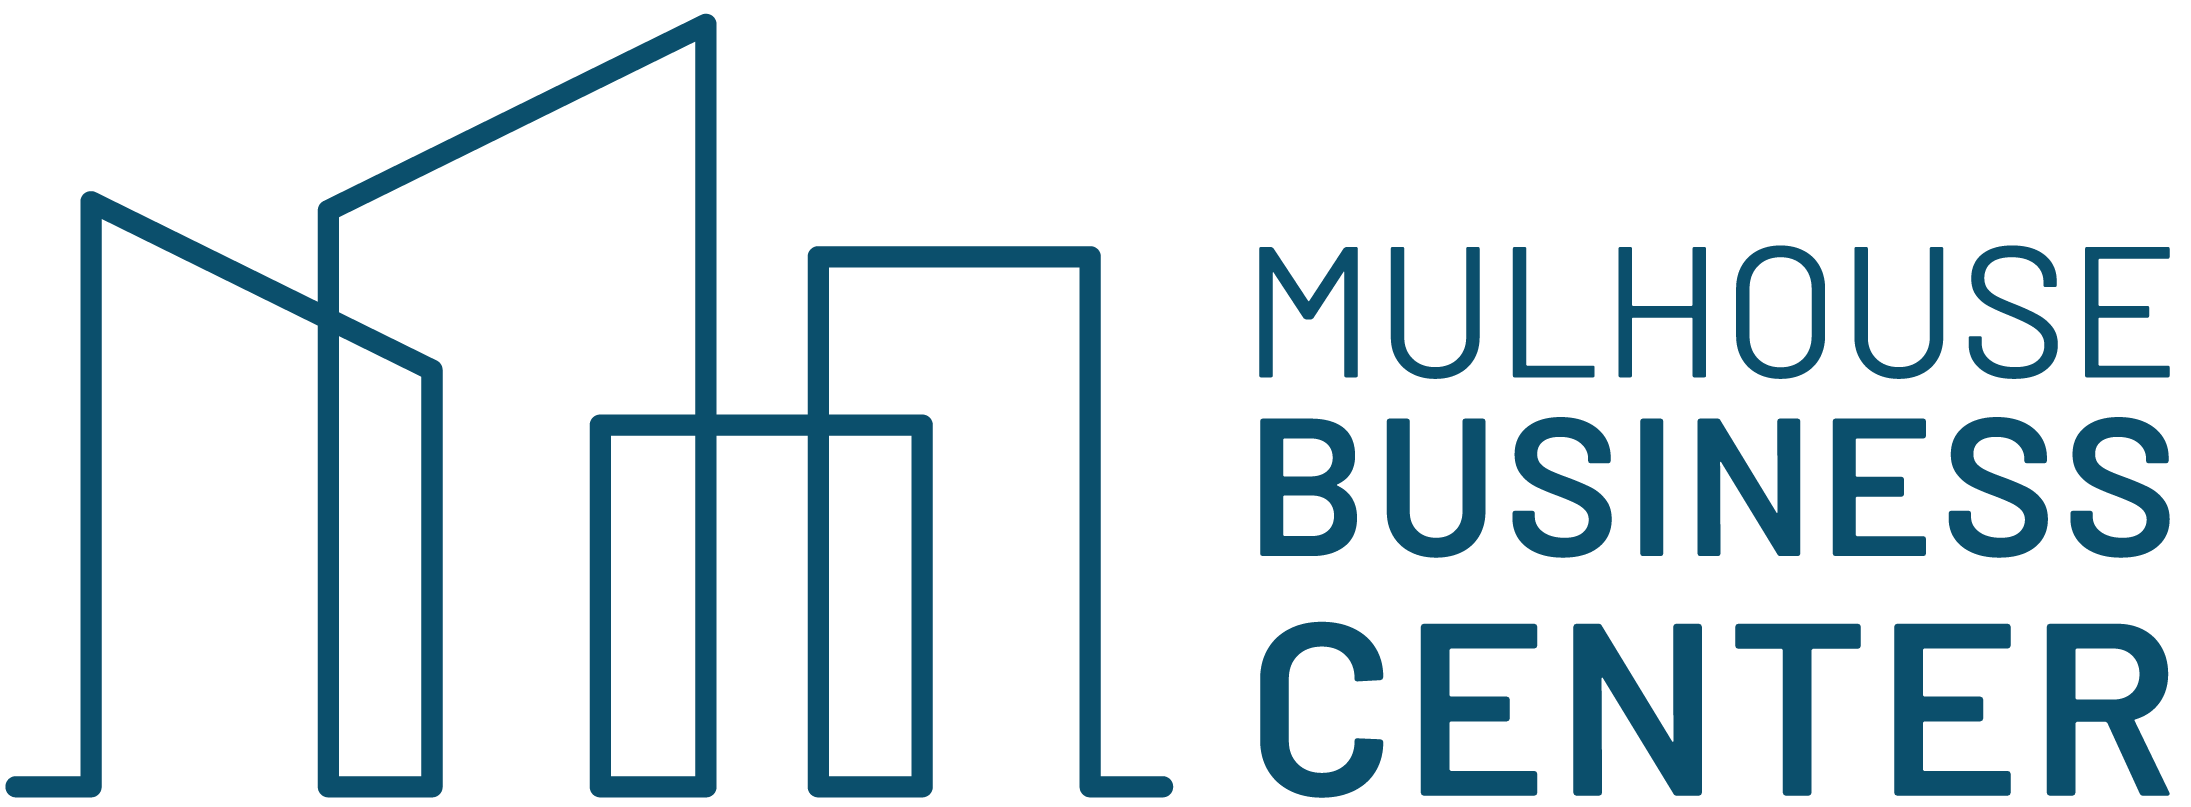 Mulhouse Business Center